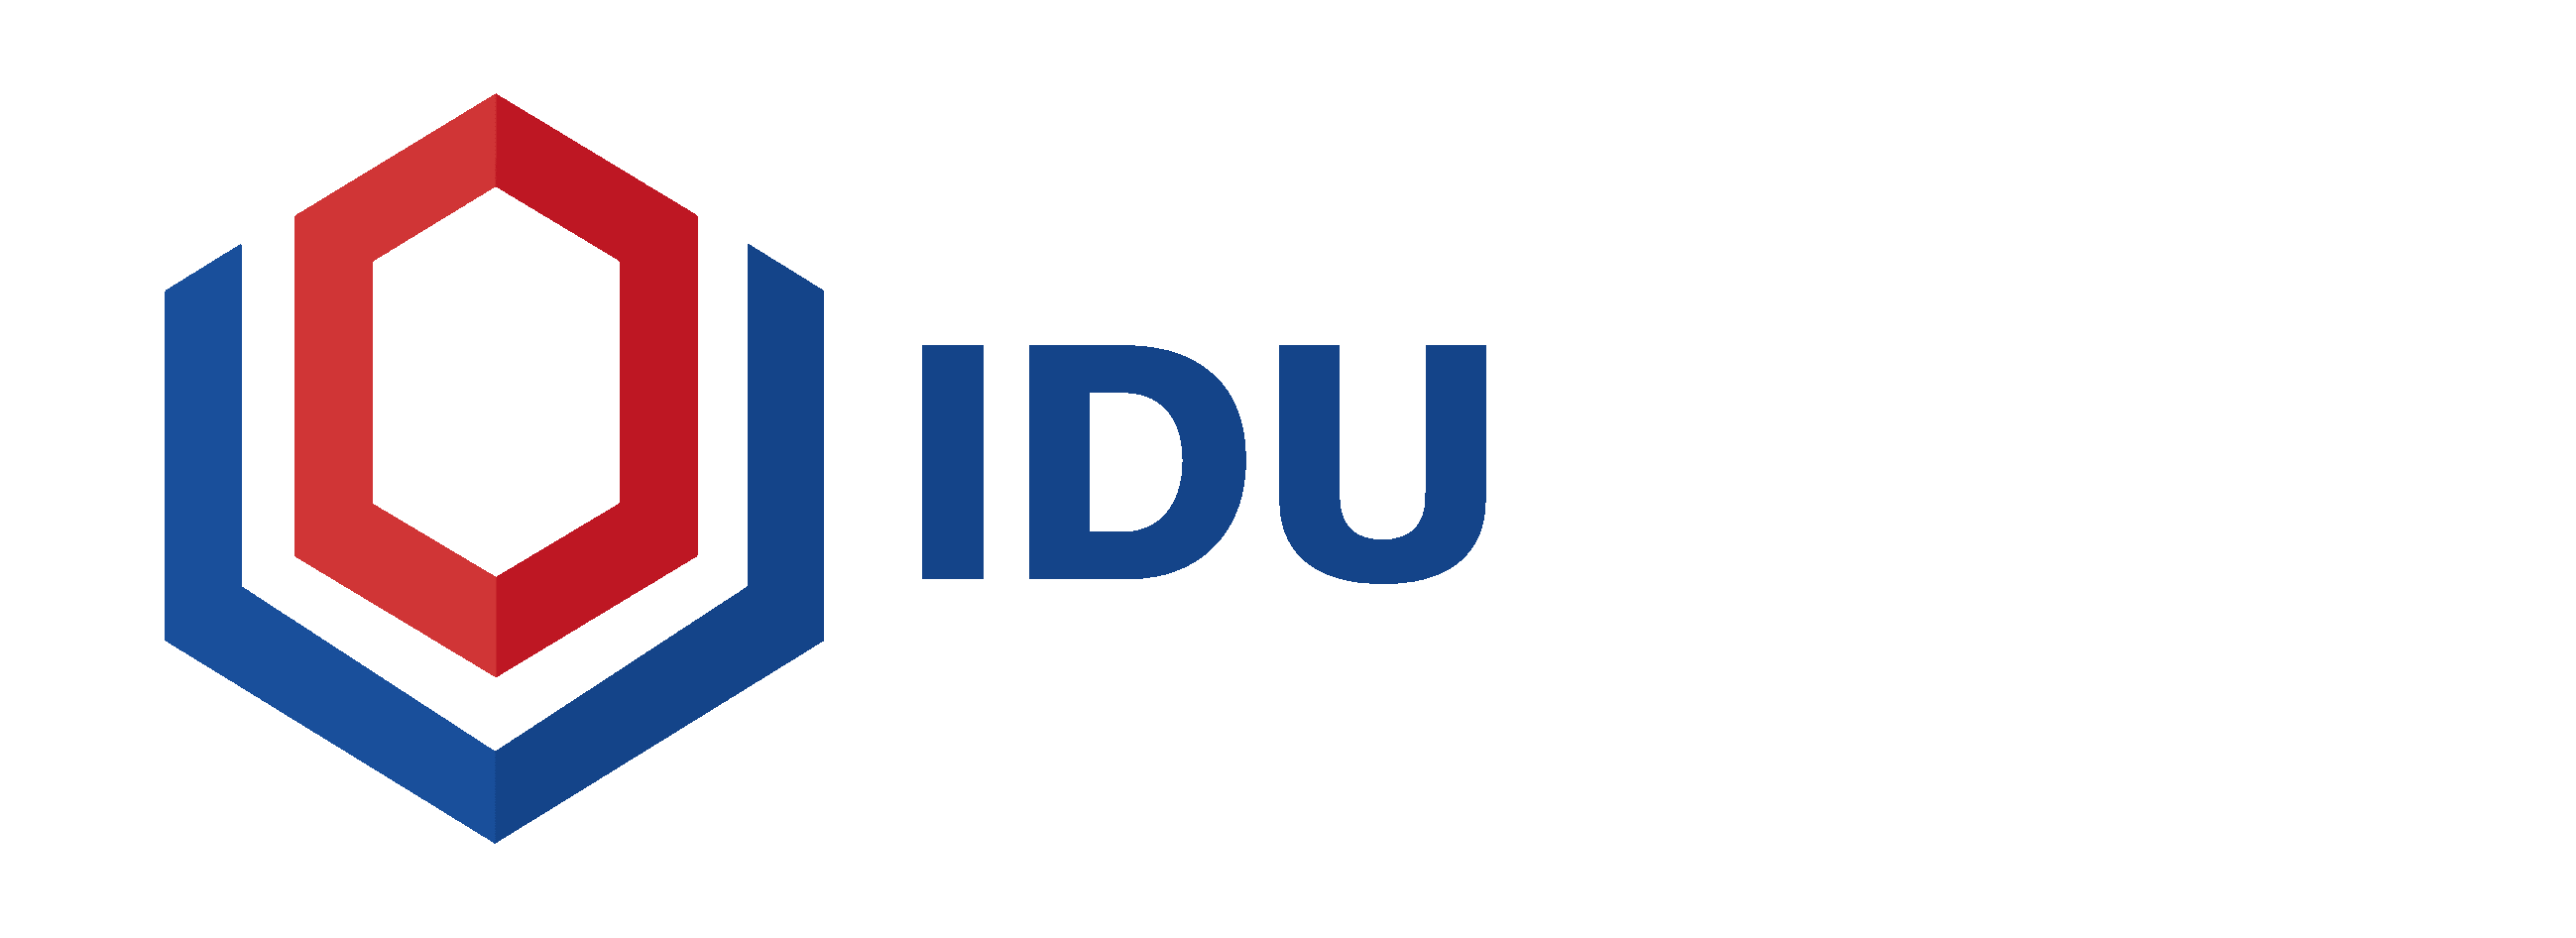 Guaranteed Standard Issue - Group Disability Insurance | IDU